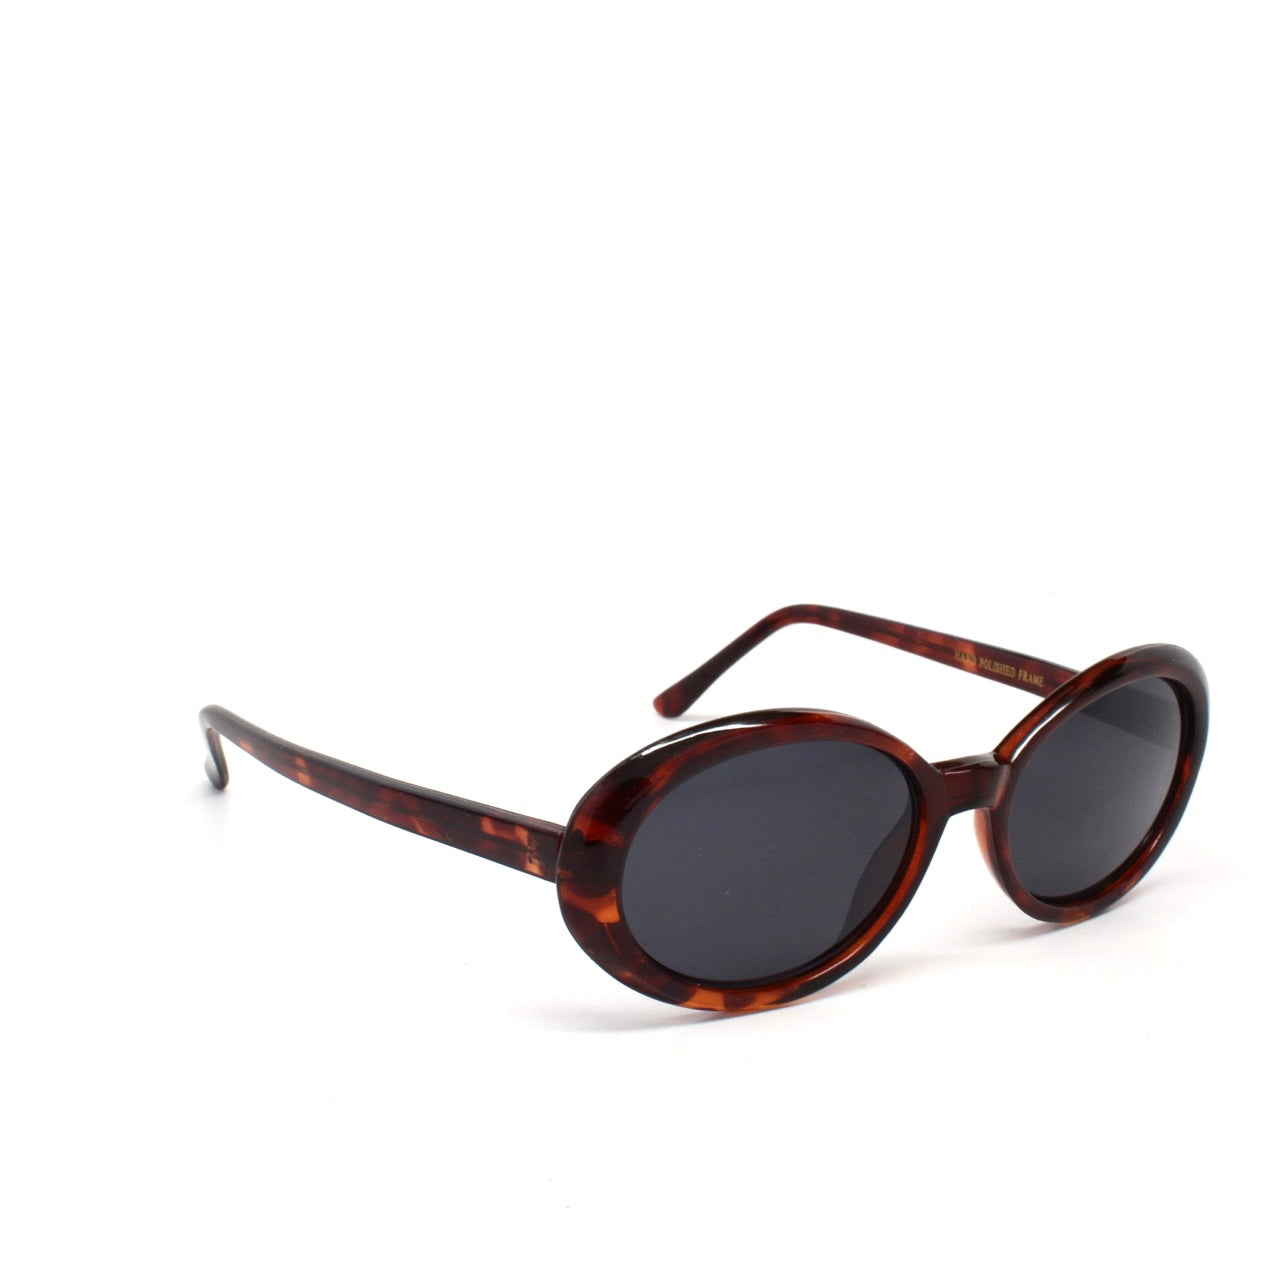 Vintage Standard Size 90s Mod Original Hermosa Oval Sunglasses - Red/Black